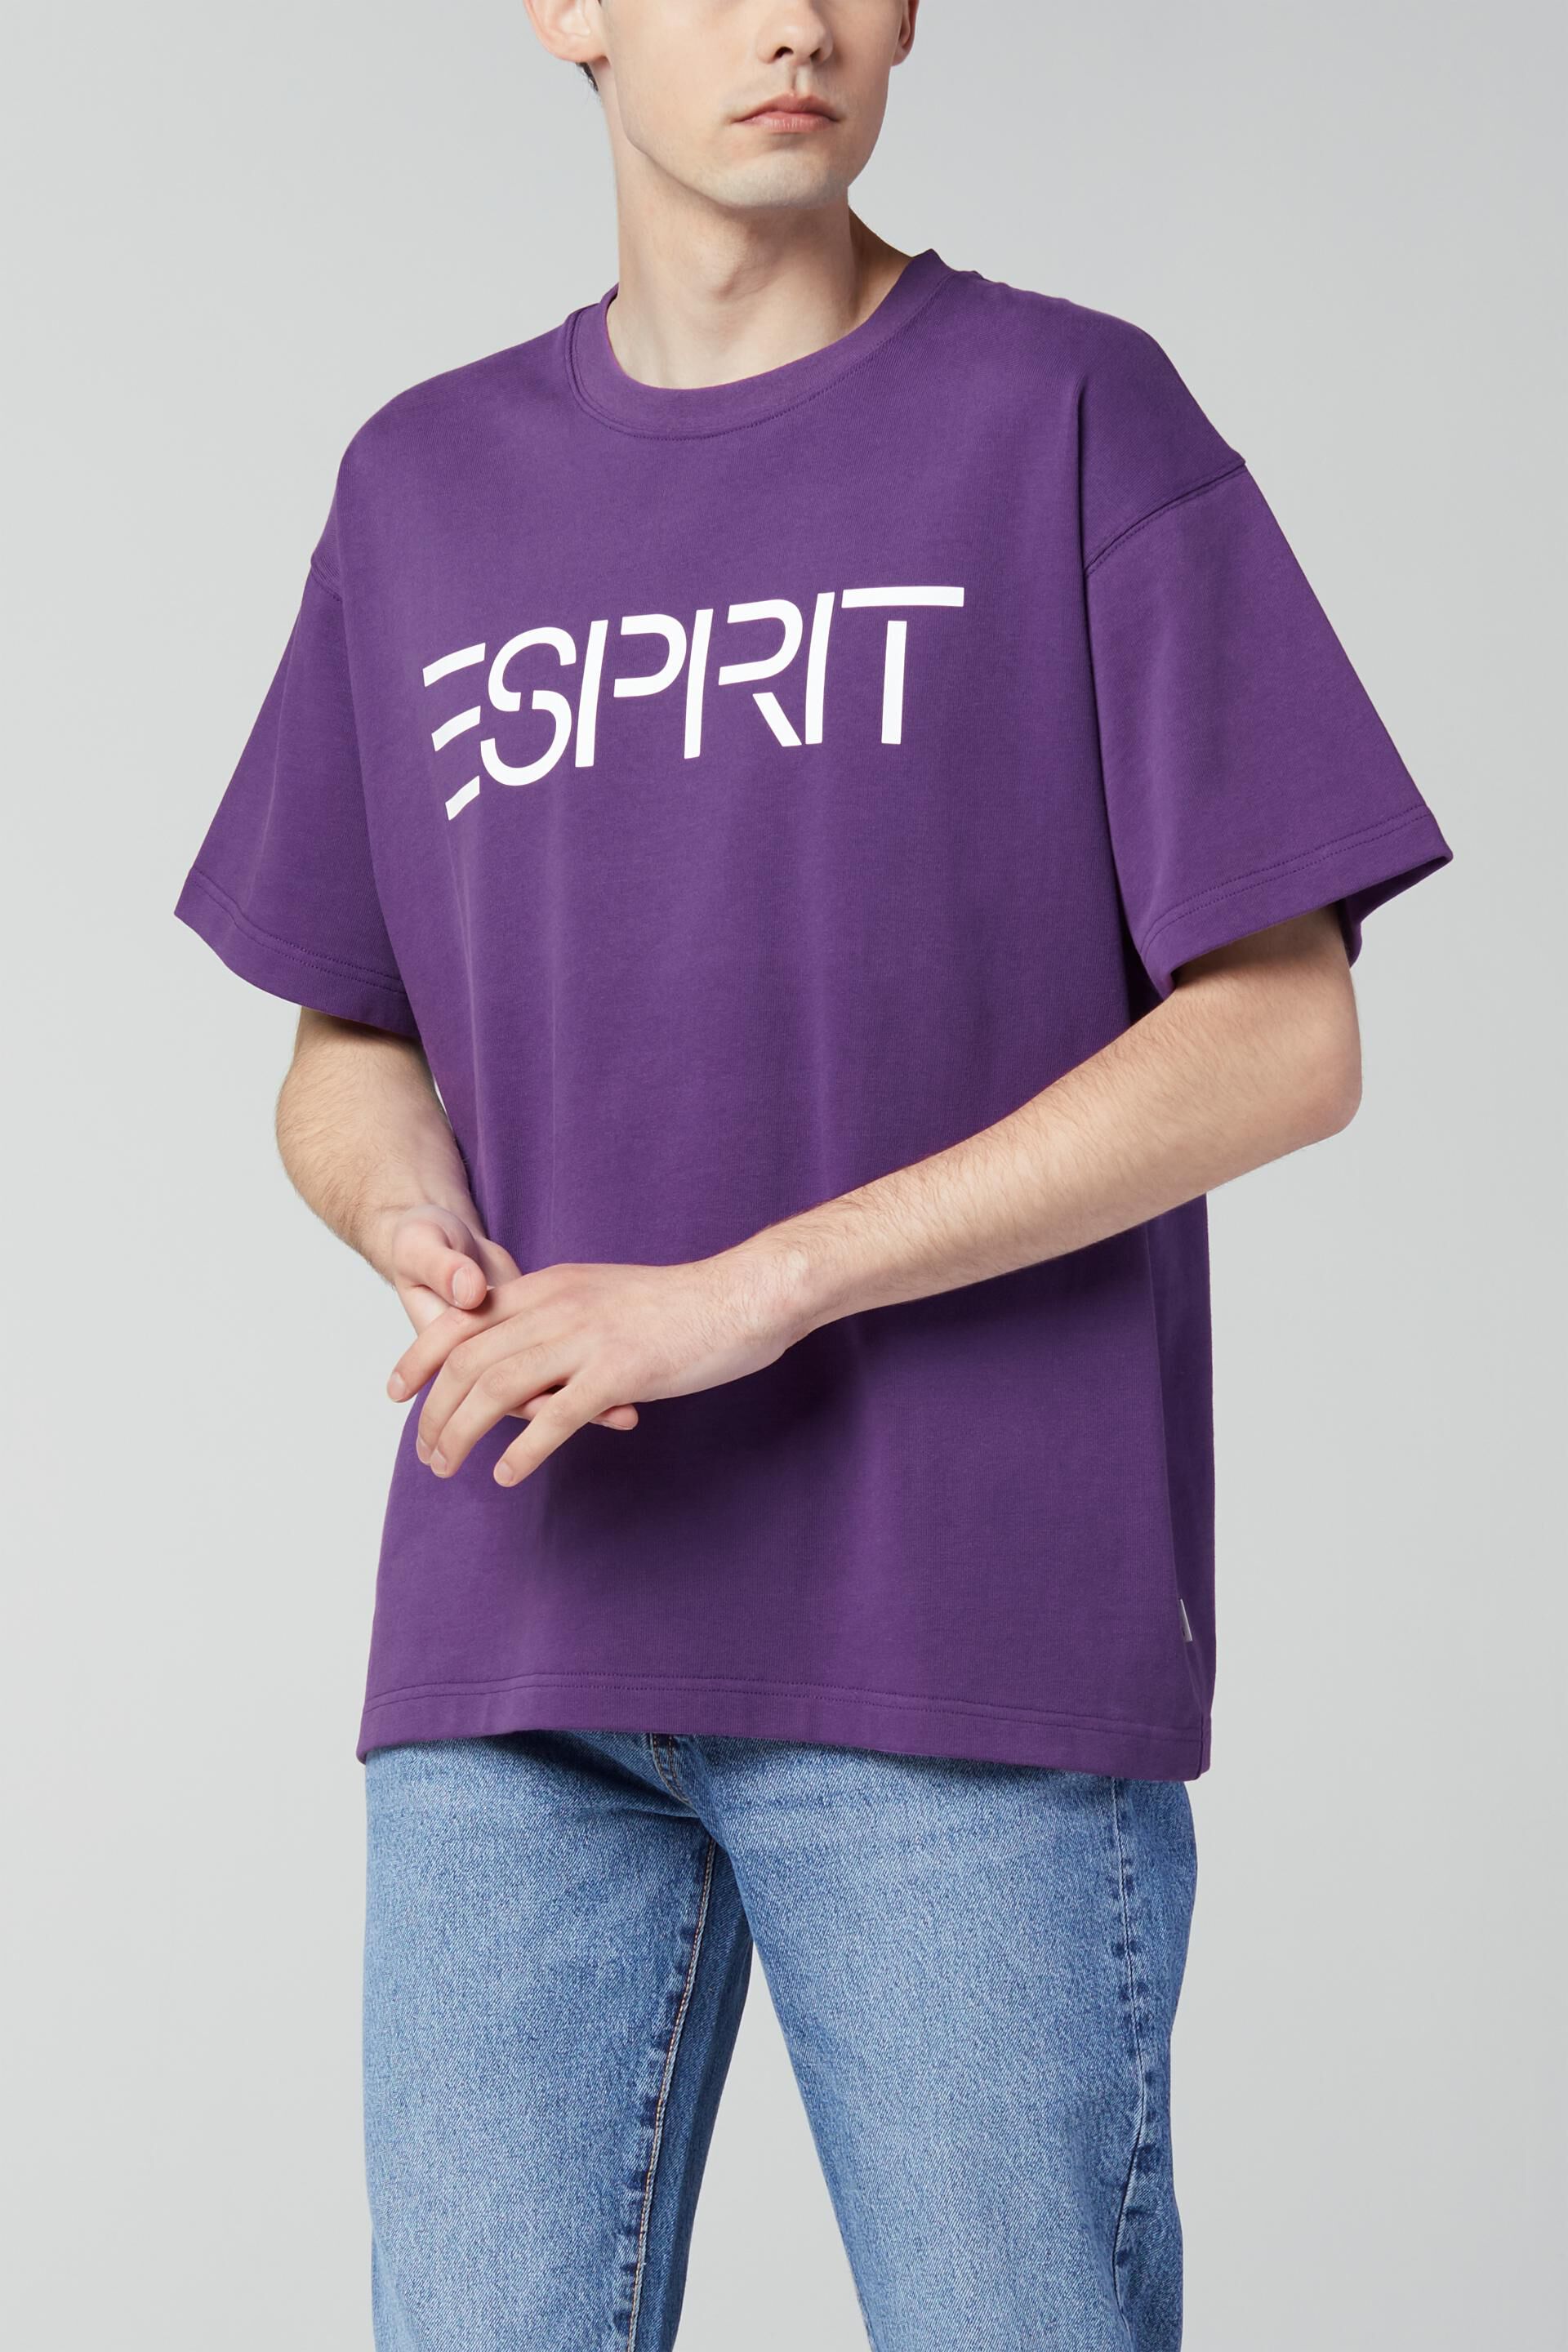 Esprit a Unisex T-shirt print with logo